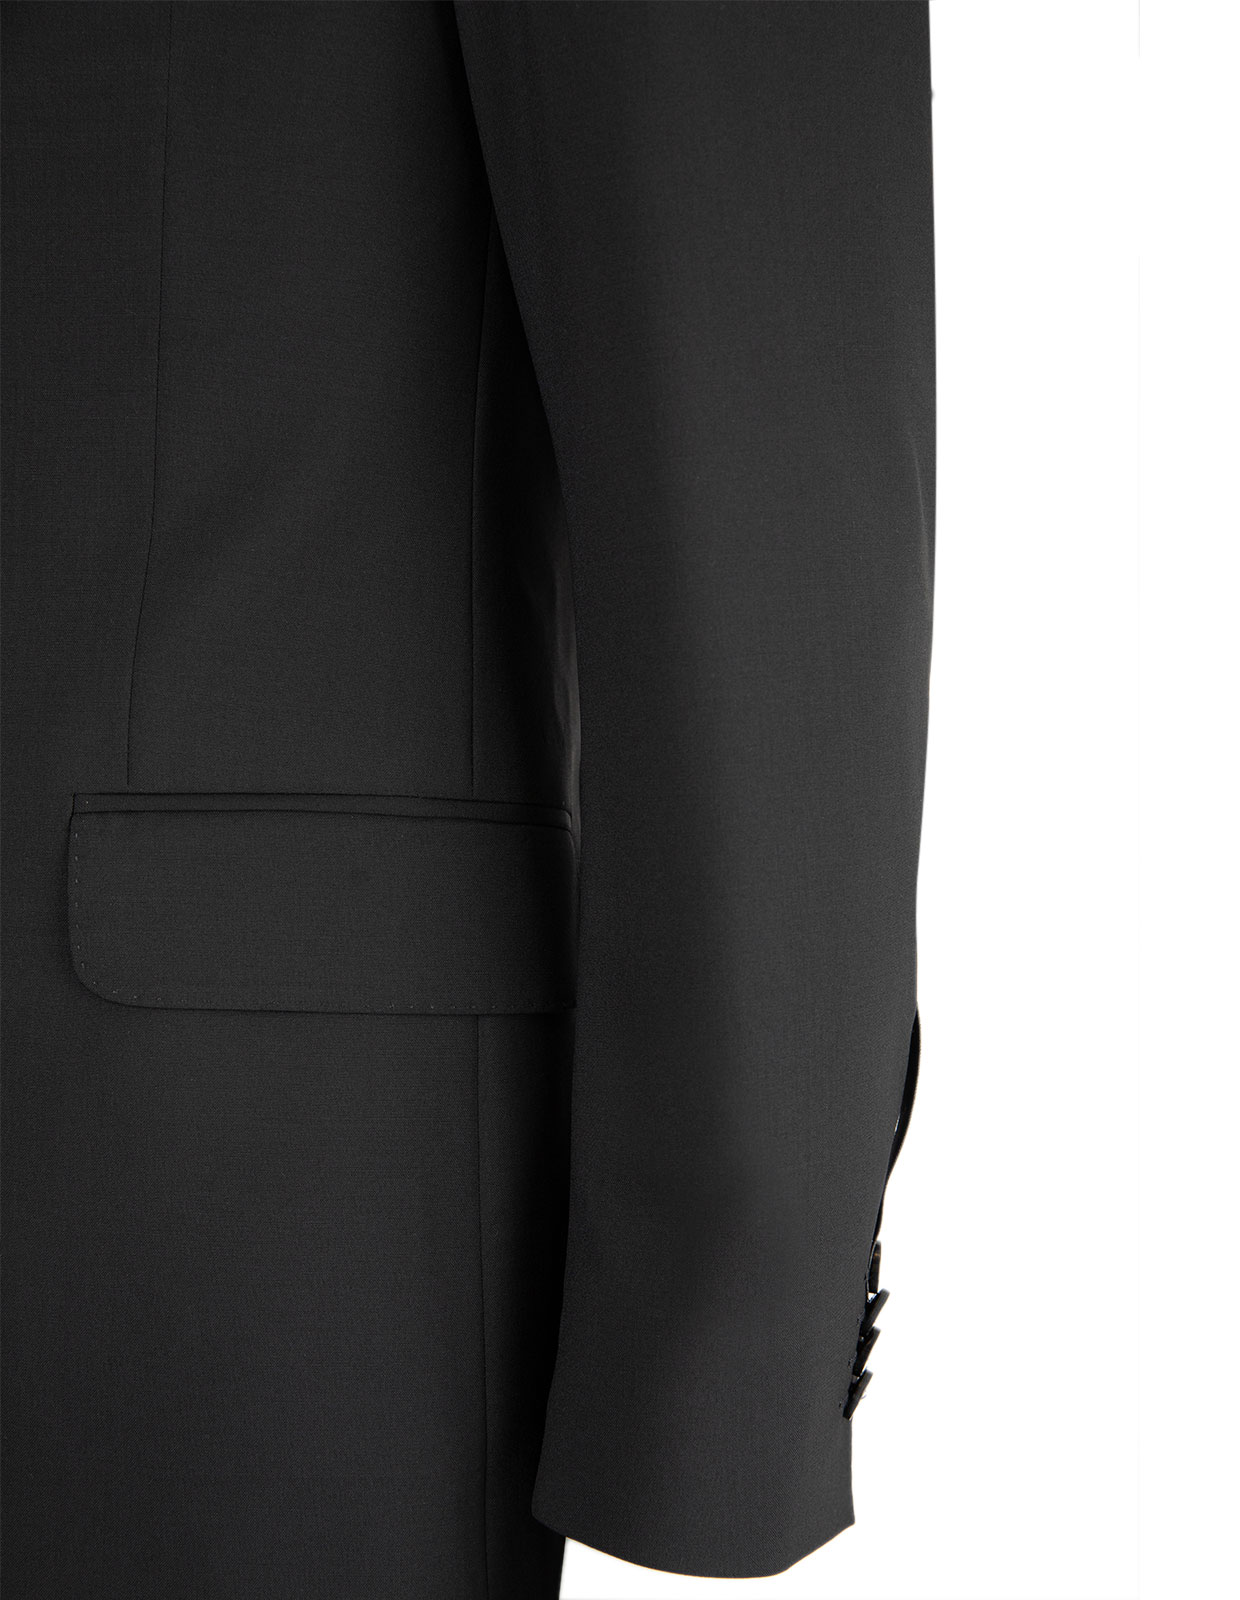 Edmund Suit Jacket Slim Fit Mix & Match Wool Black Stl 96